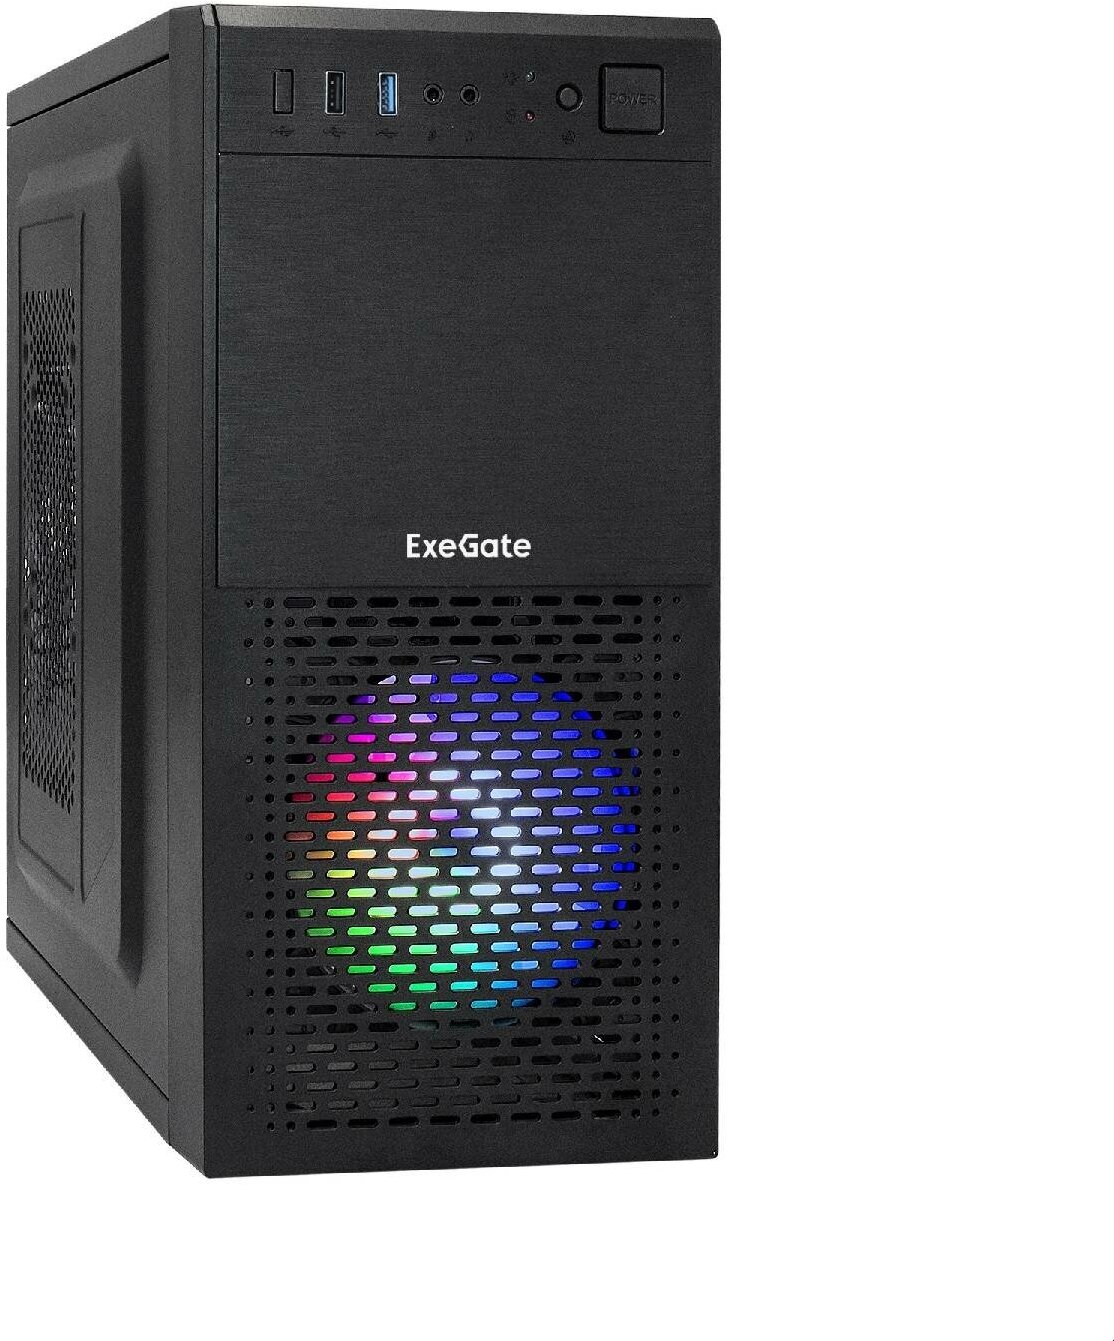 Корпус Minitower ExeGate mEVO-7807-NPX450 (mATX, БП 450NPX 12см, 1*USB+1*USB3.0, черный 1x12см с RGB подсветкой)